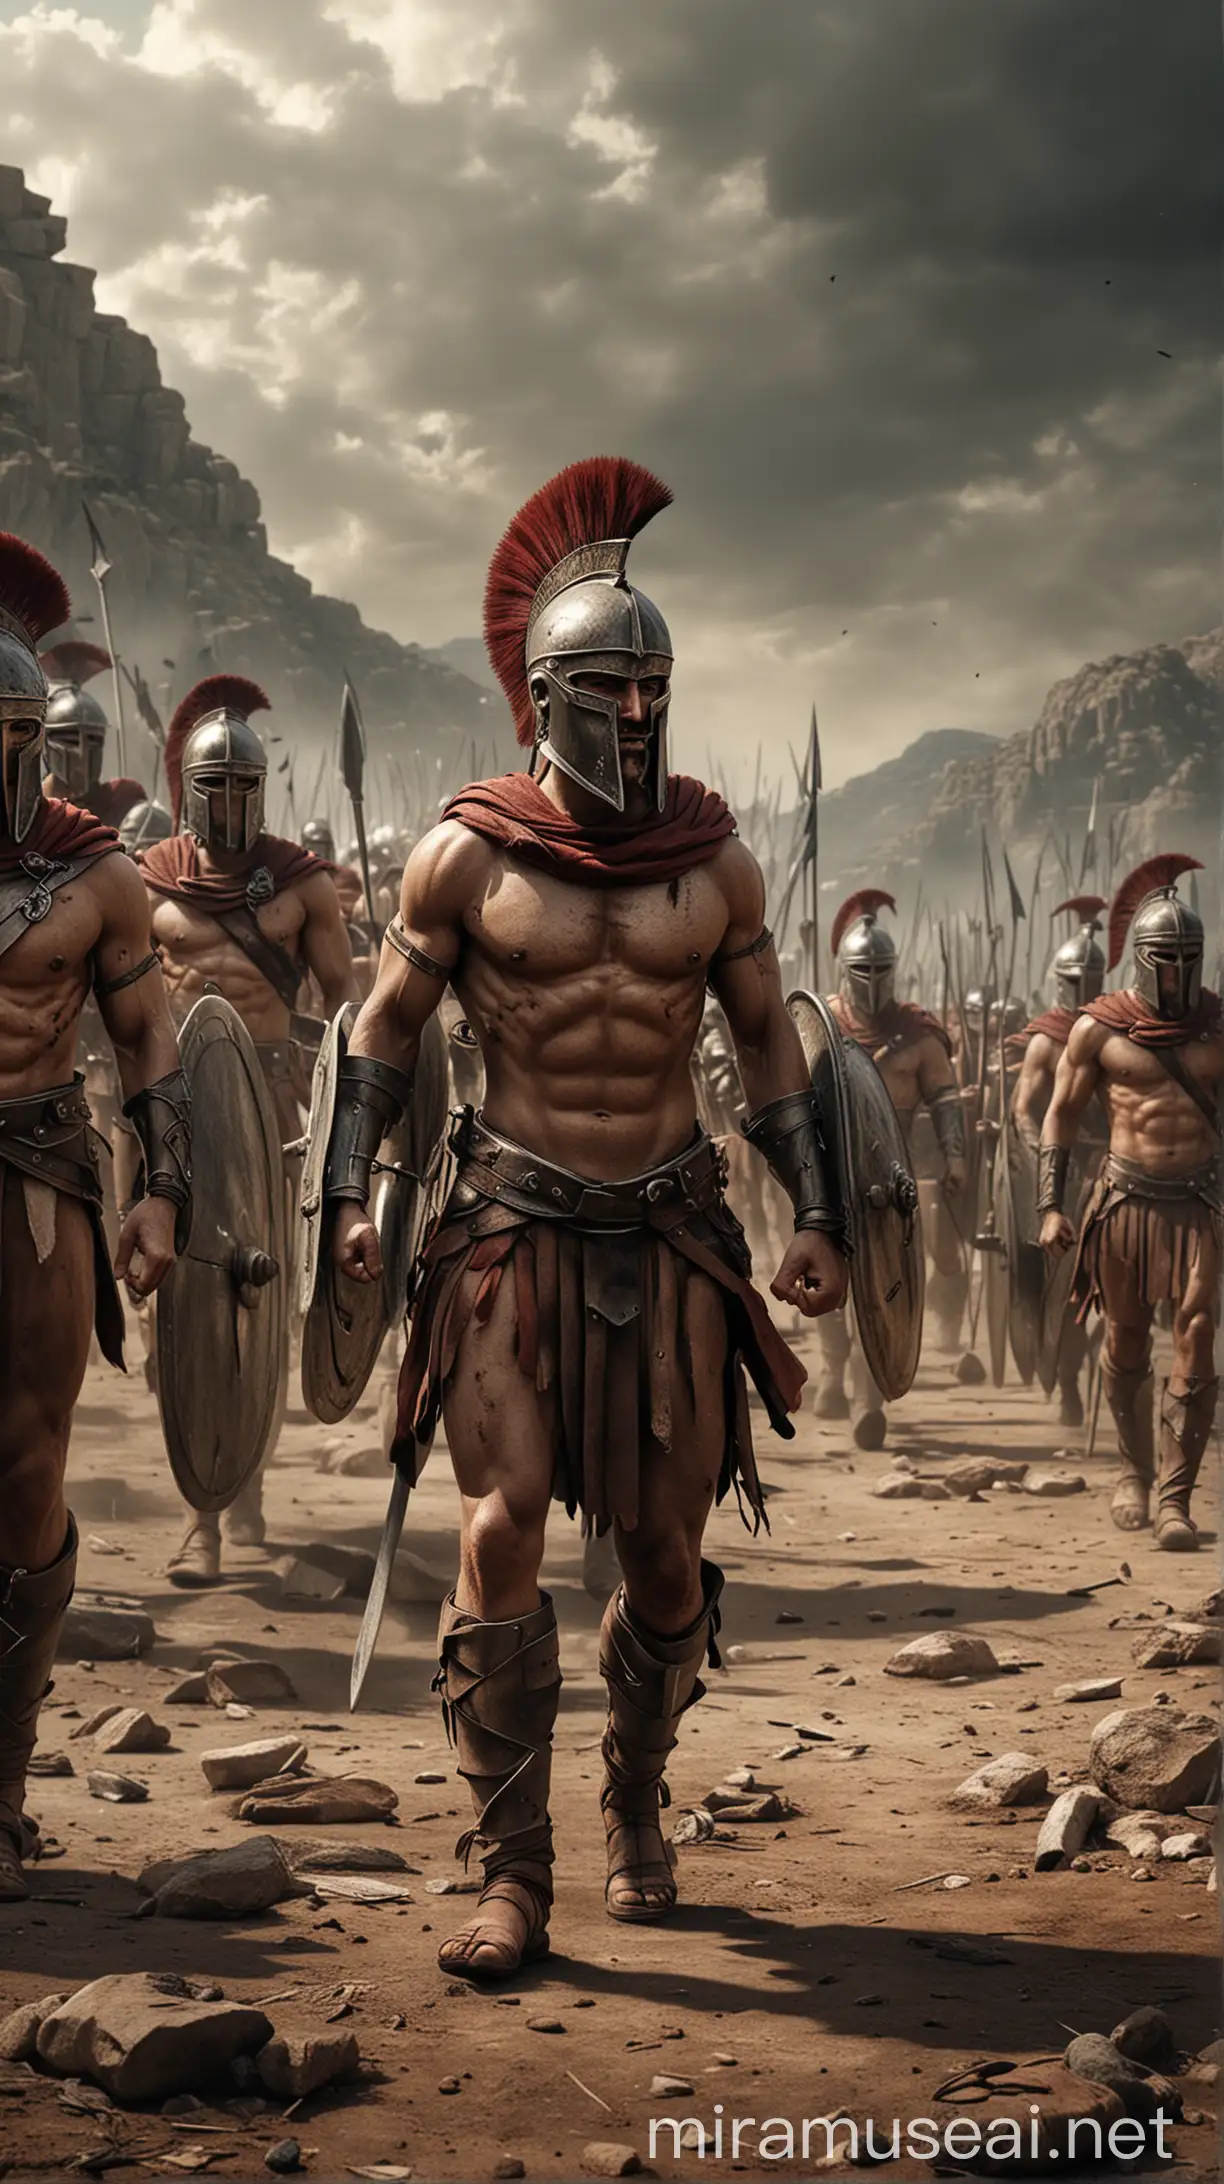 Spartans preparing for battle, showcasing their fearless spirit. hyper realistic